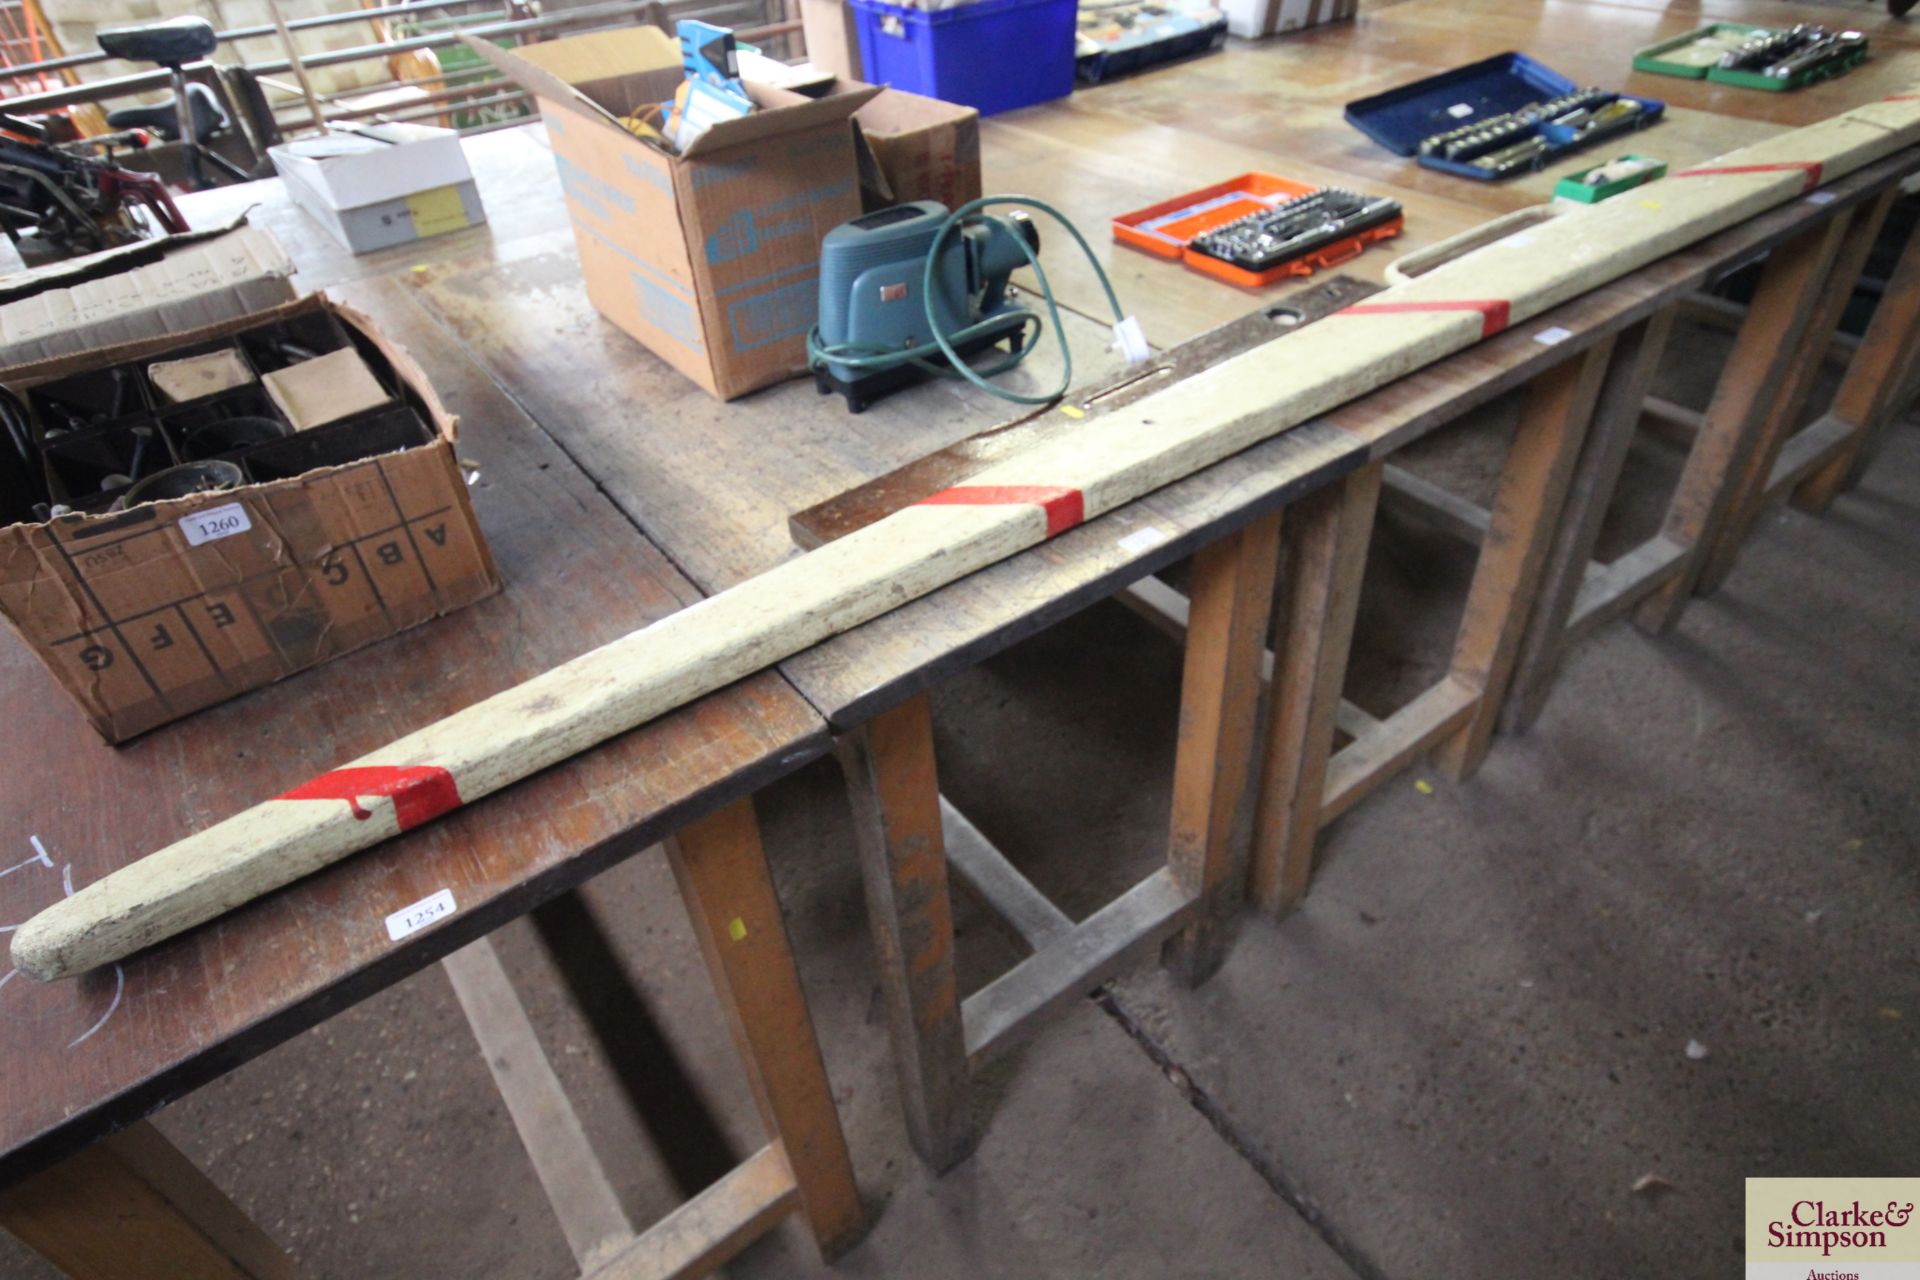 A wooden work bench measuring approx. 24" deep x 4